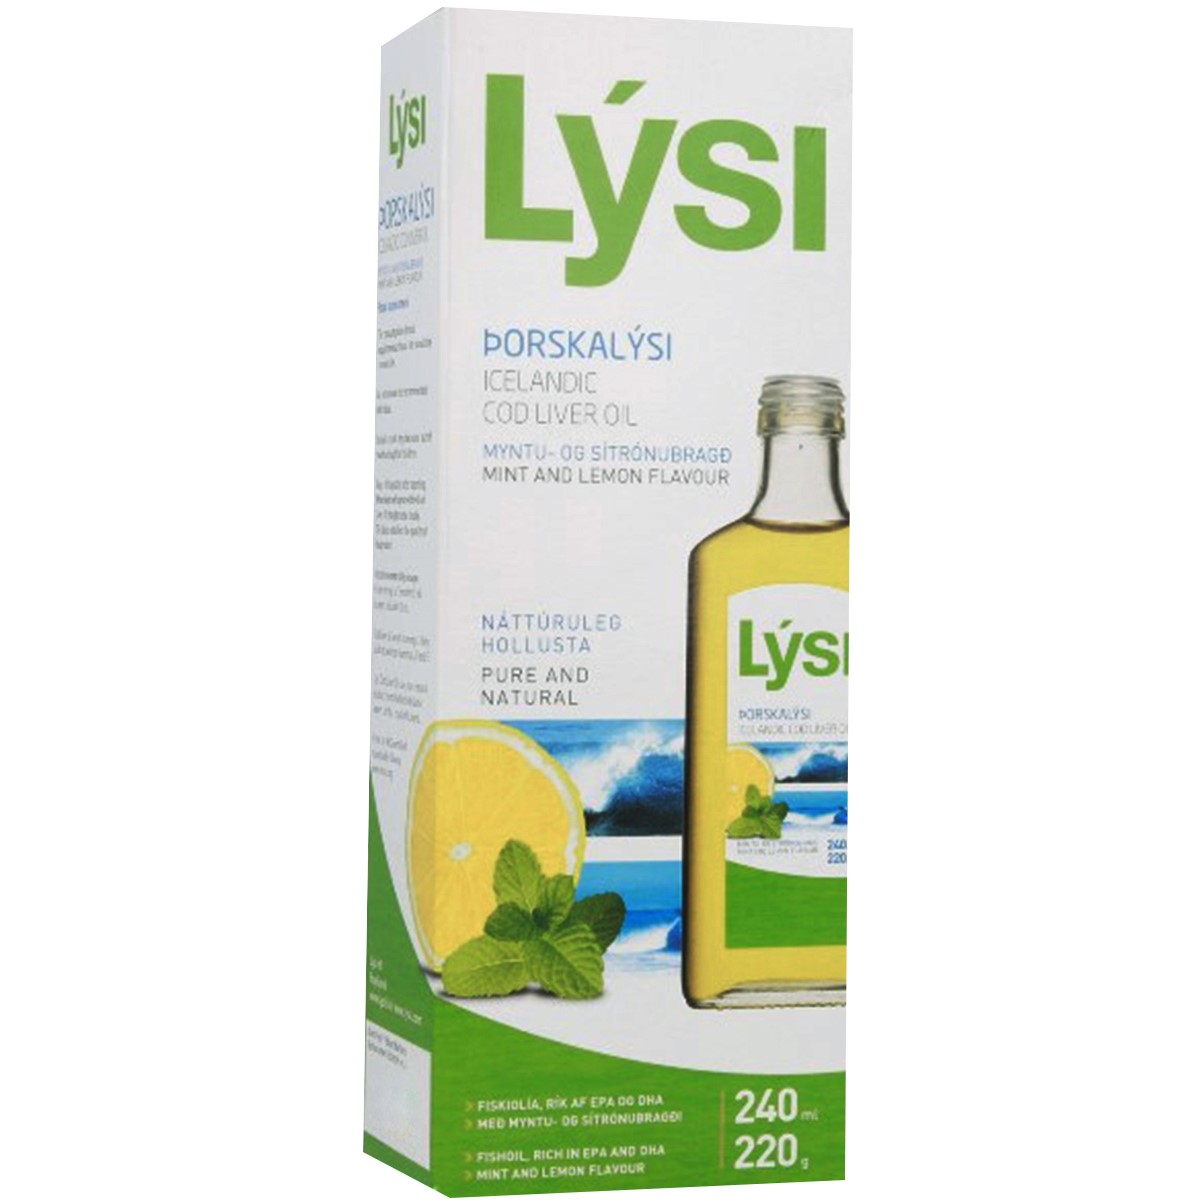 Омега-3 Lysi рыбий жир из печени трески с витаминами A, D, E со вкусом лимона и мяты 240 мл - фото 3